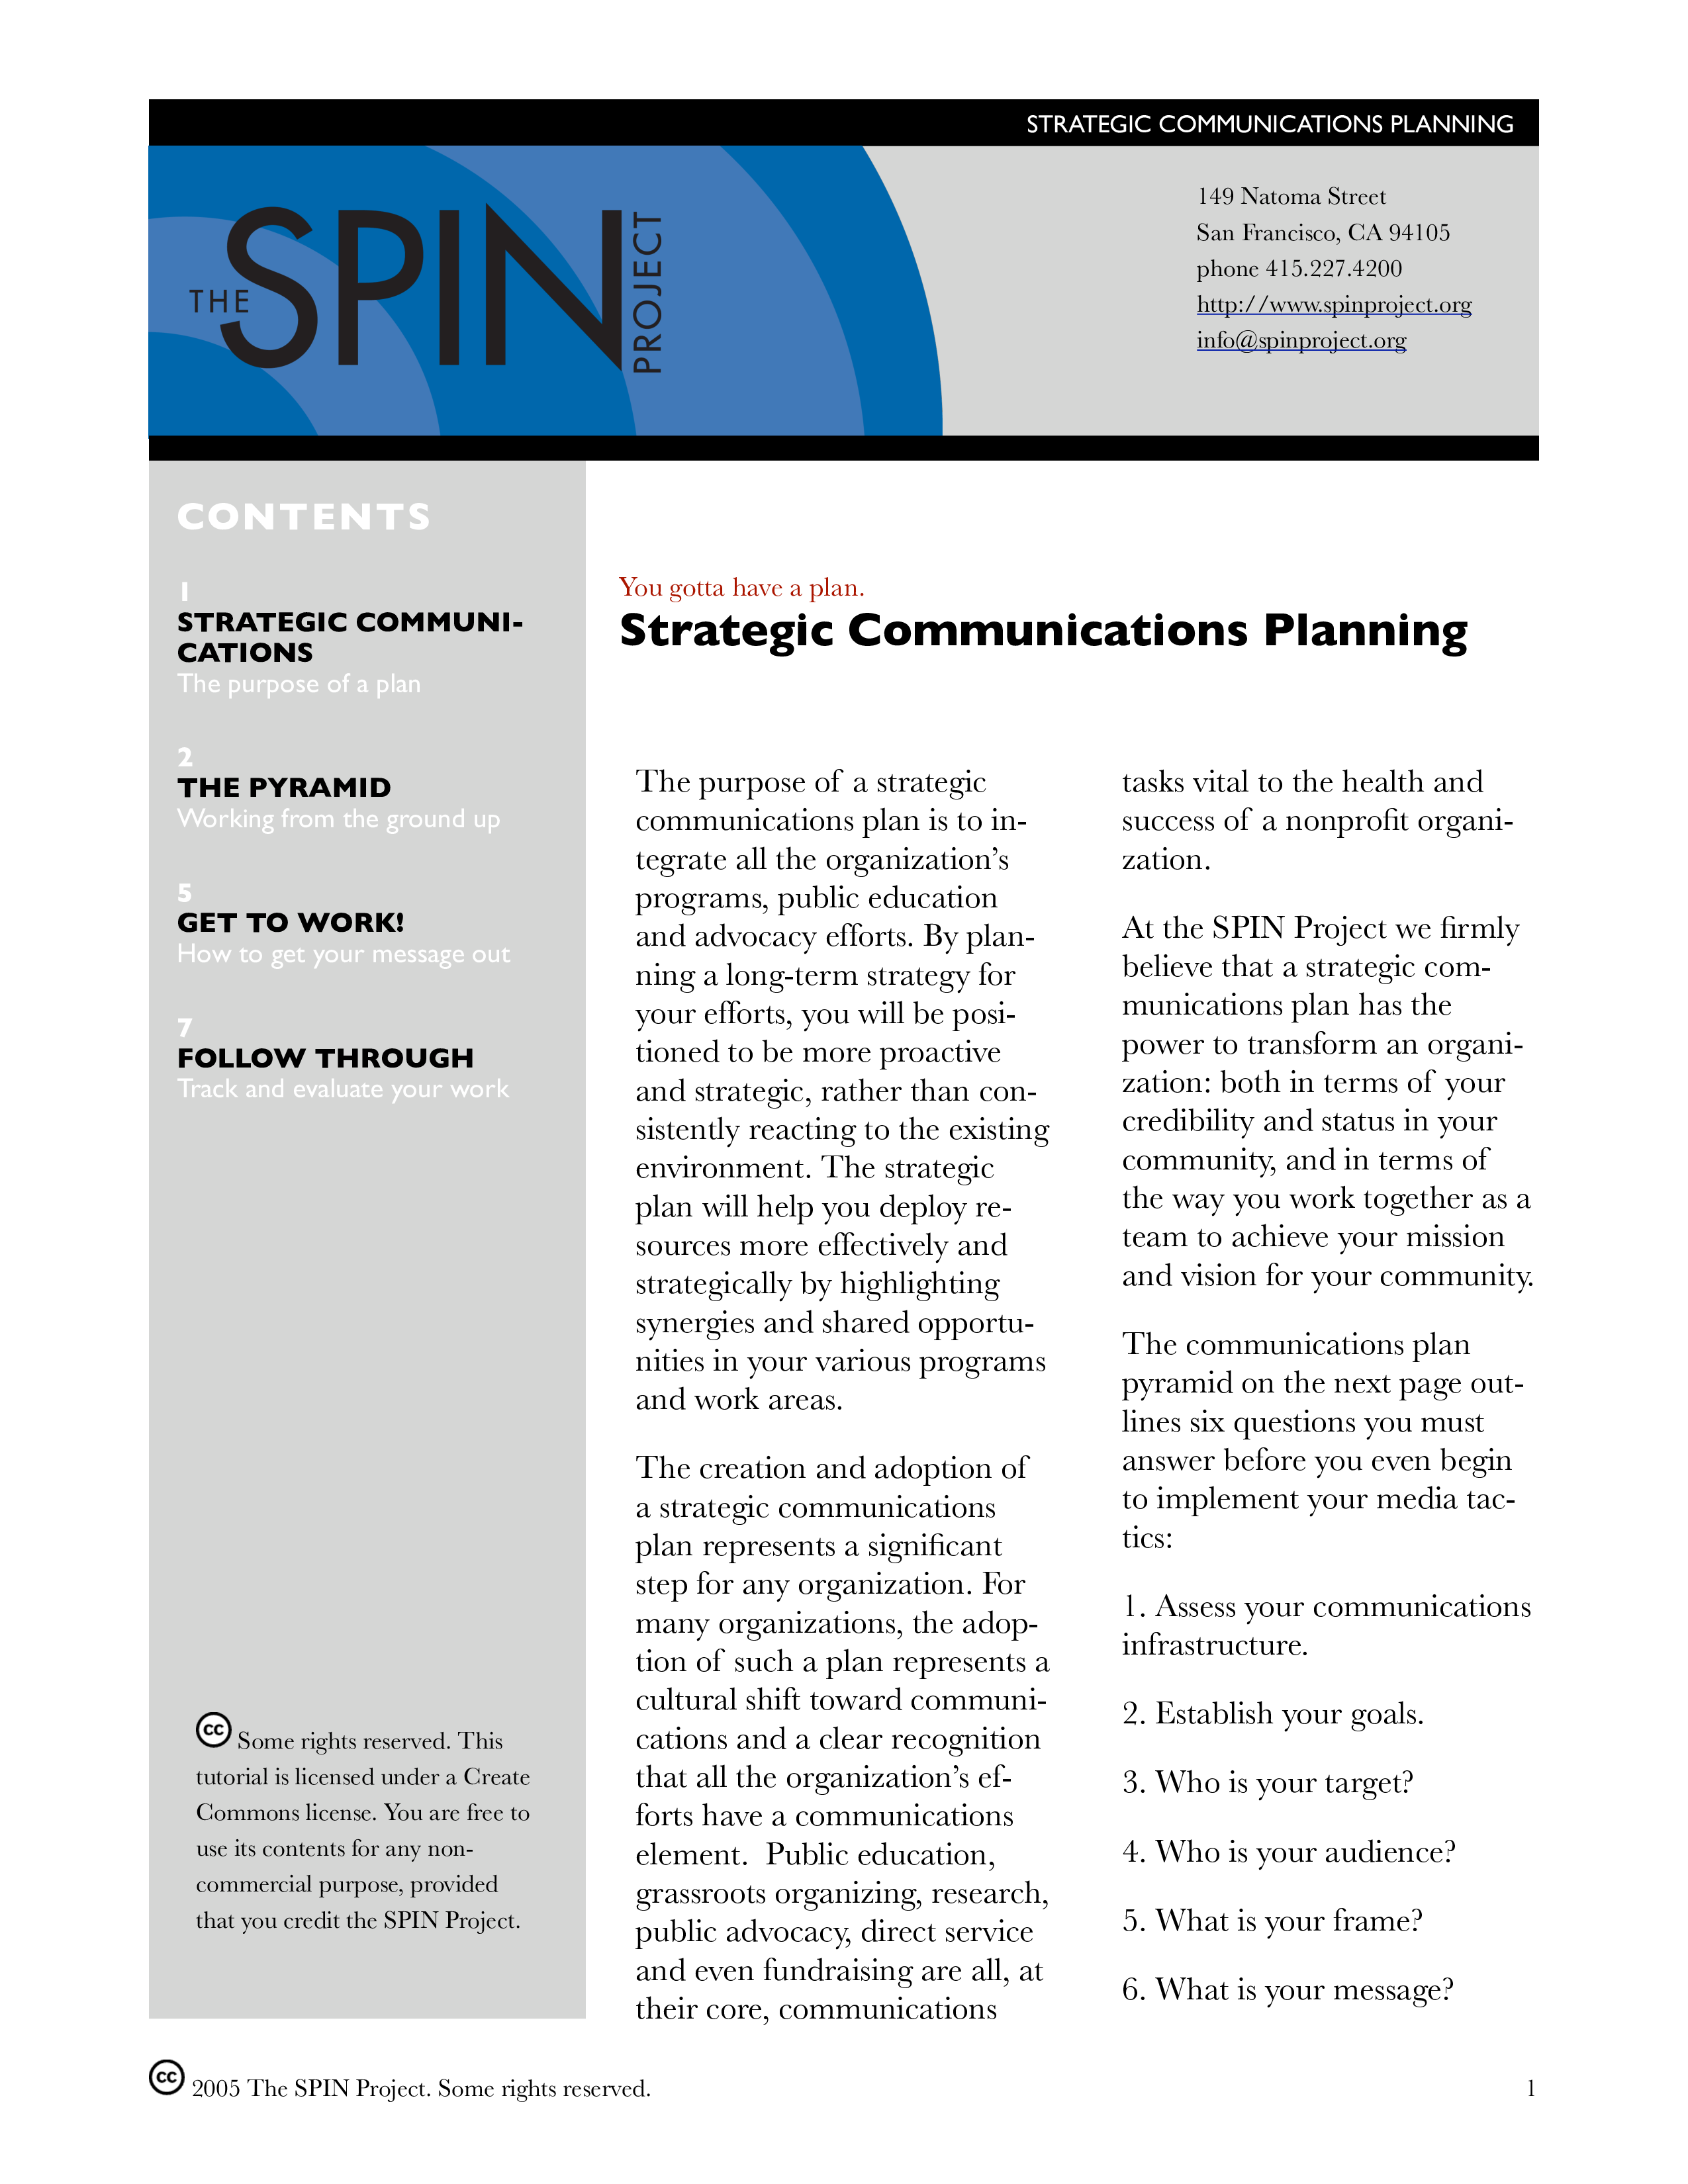 Strategic Corporate Communication Plan main image